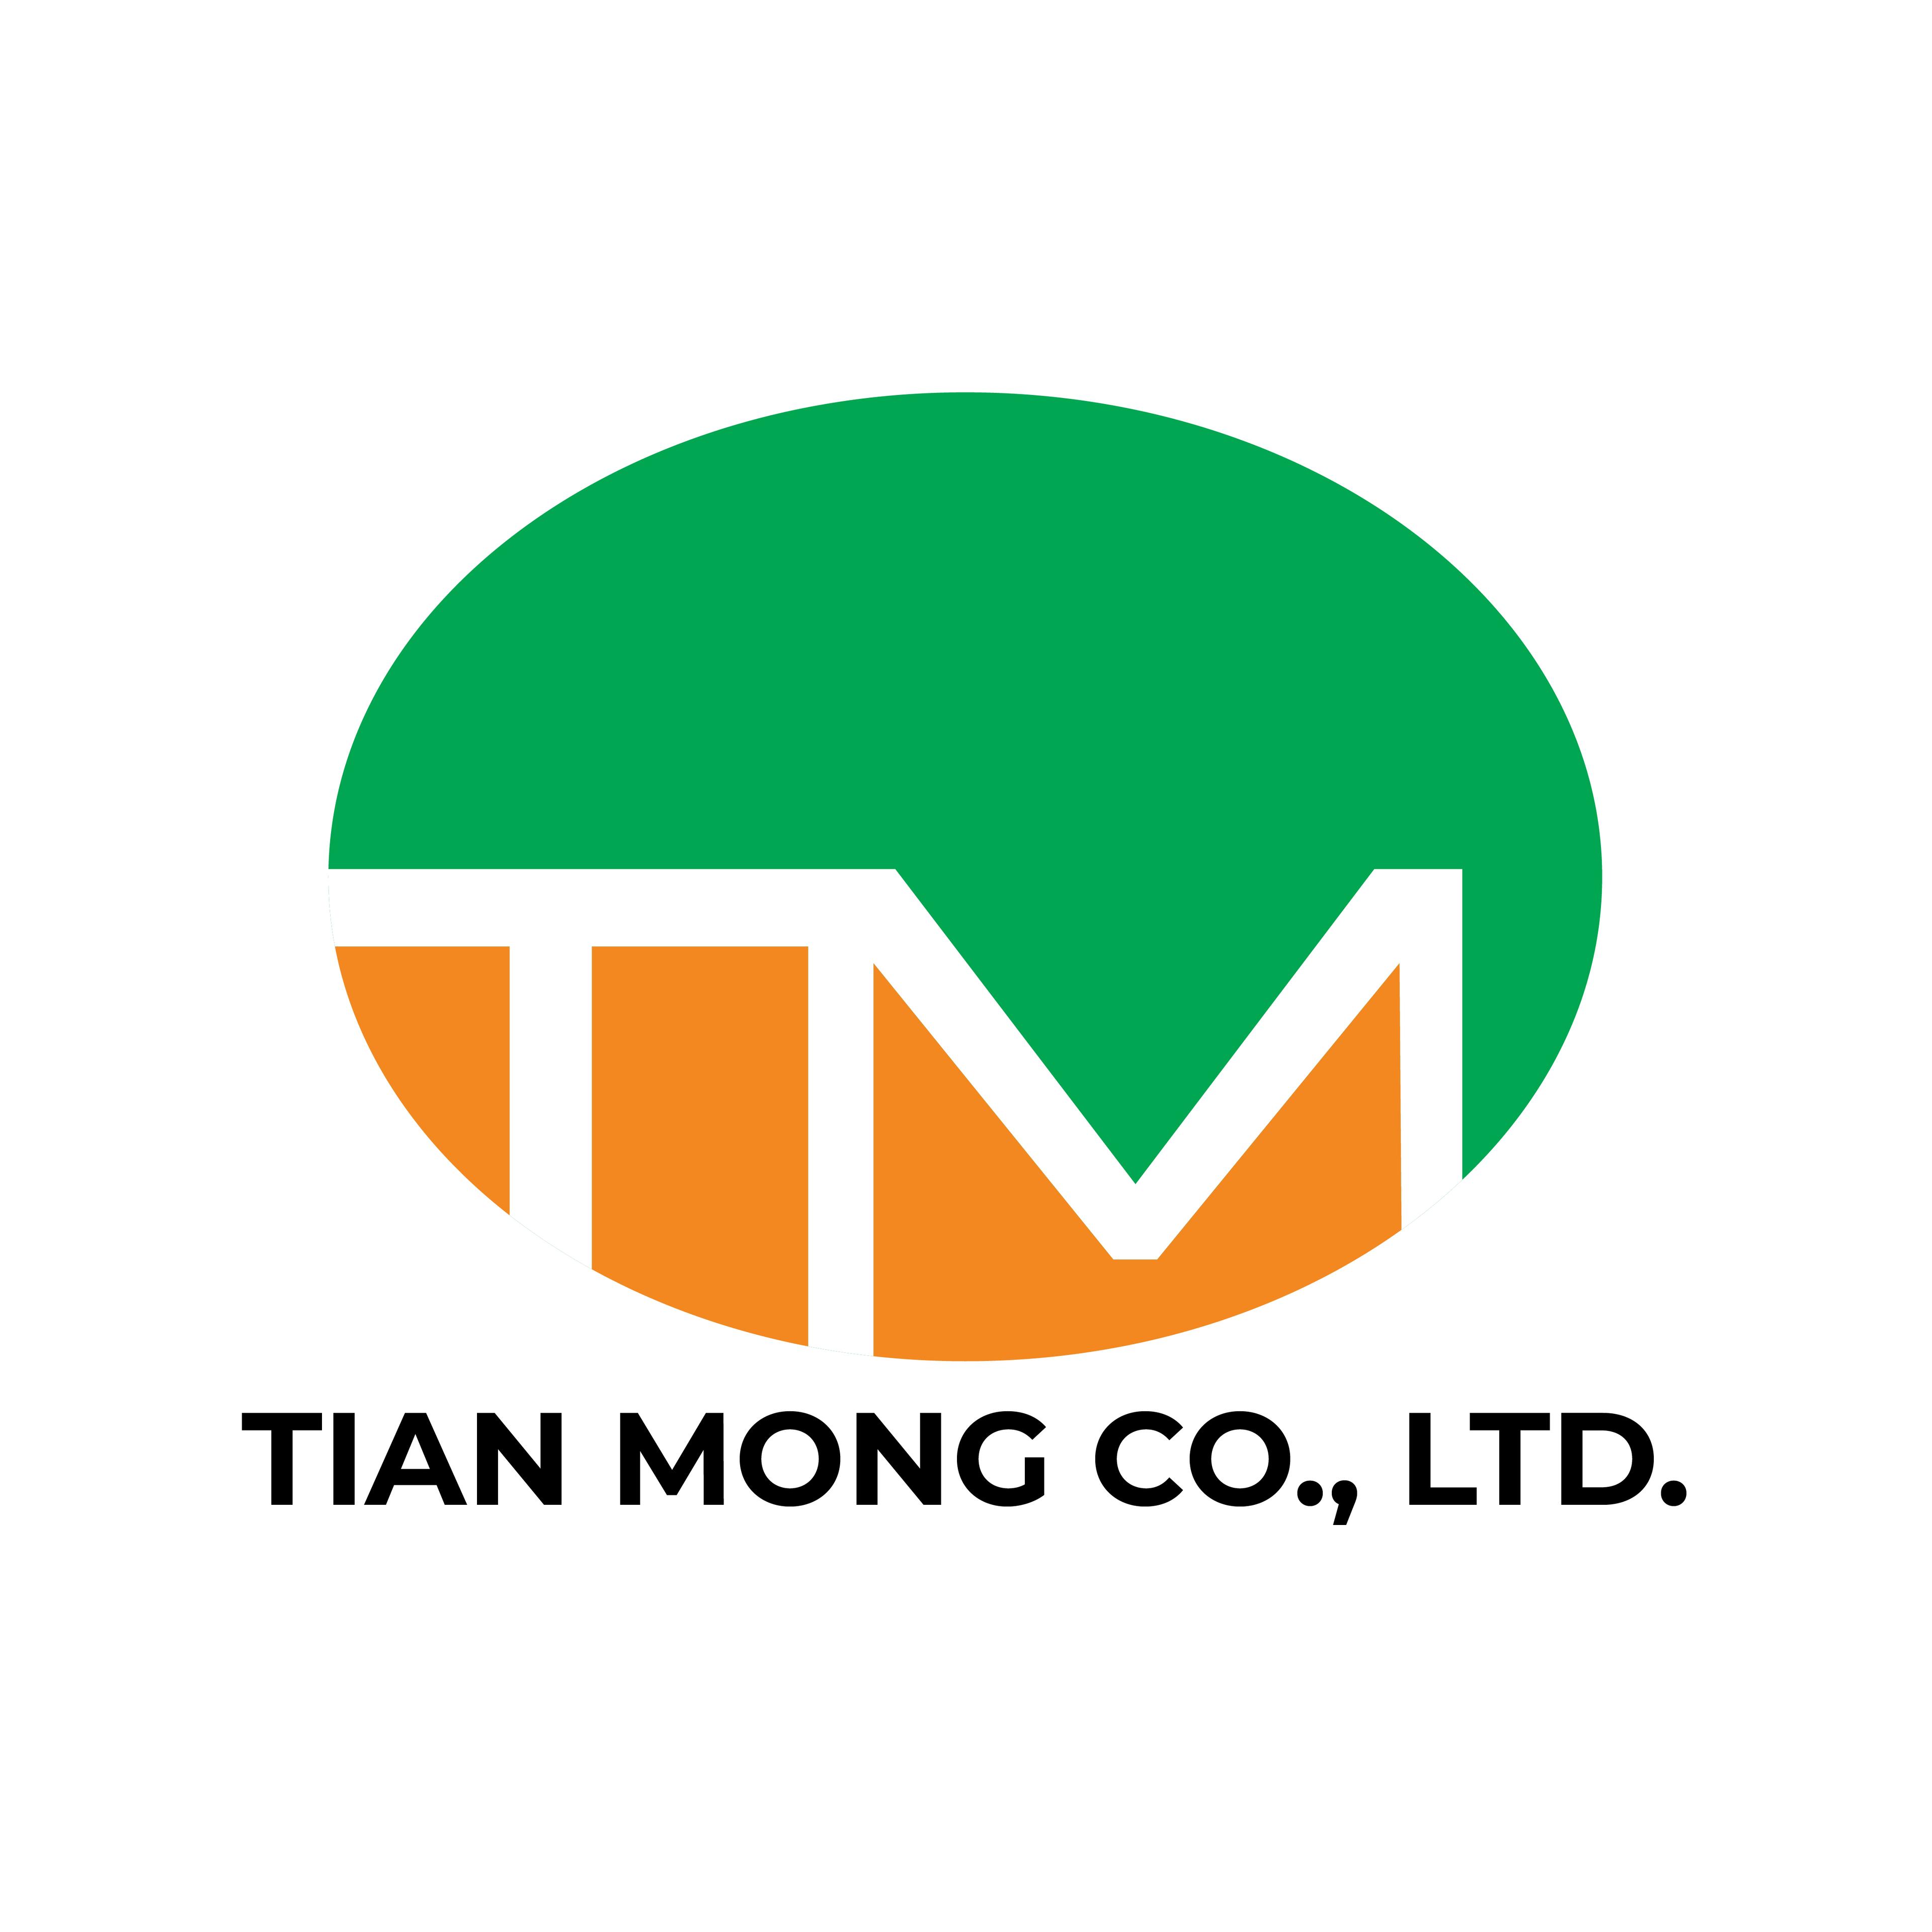 TIAN MONG CO., LTD.